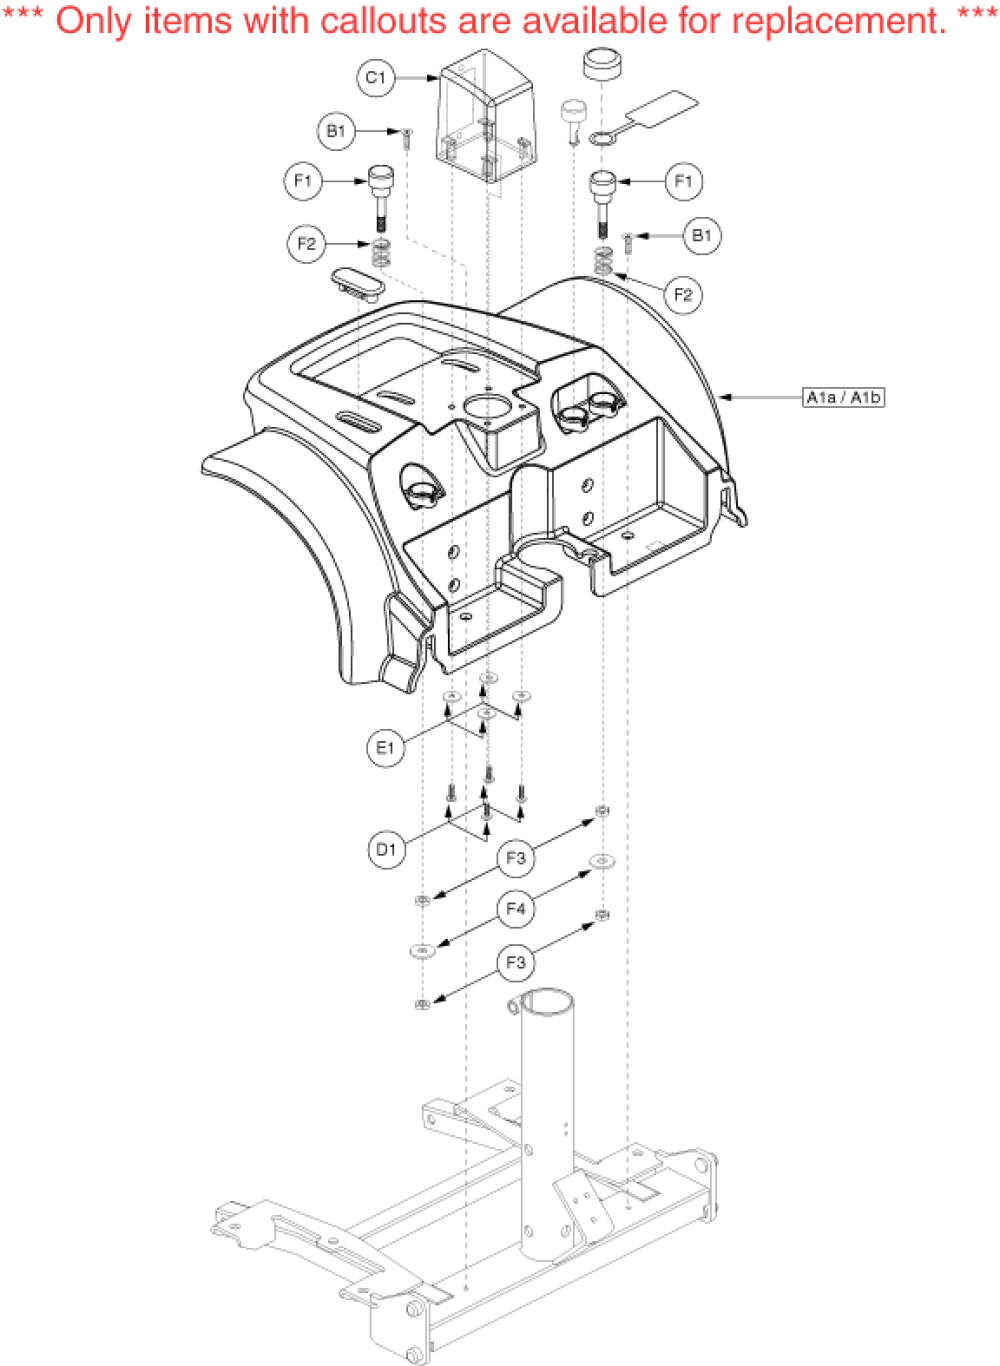 Shroud Assembly - Rear parts diagram